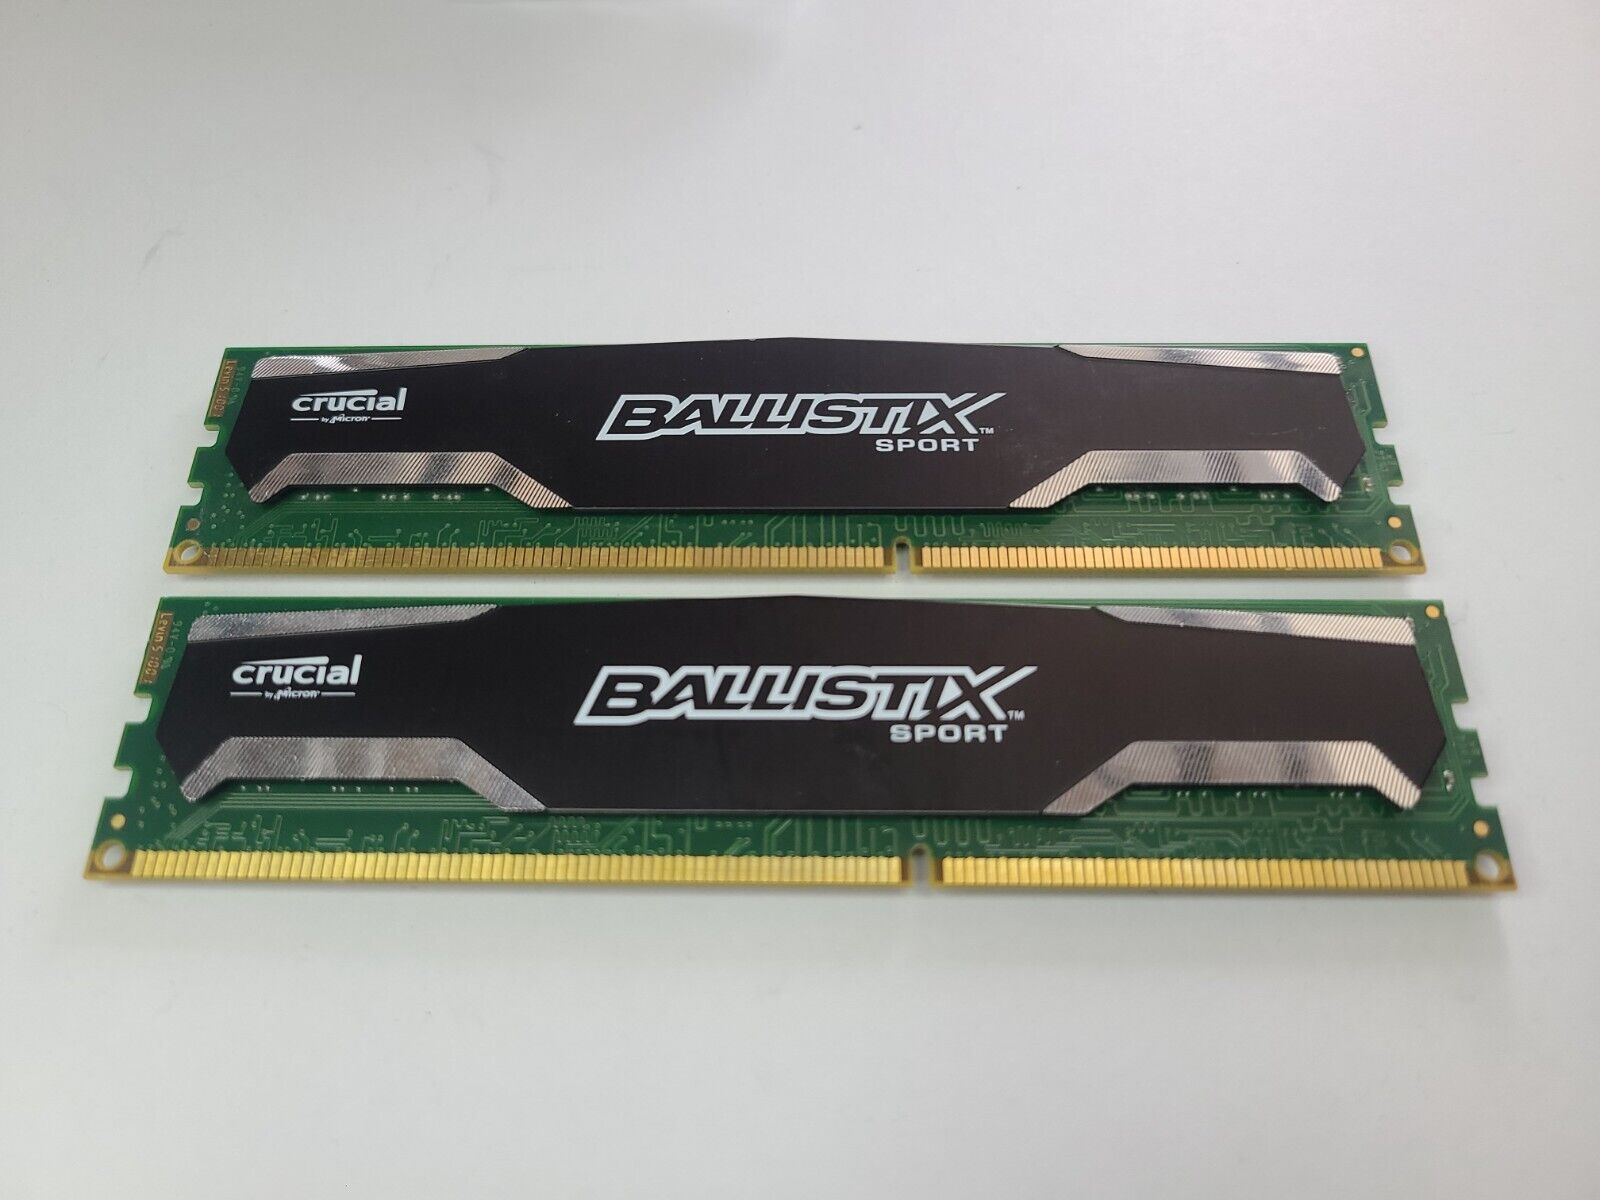 Ballistix 8GB (2x4GB) DDR3 1600MHz Desktop Ram Memory | BLS4G3D1609DS1S00 | USA